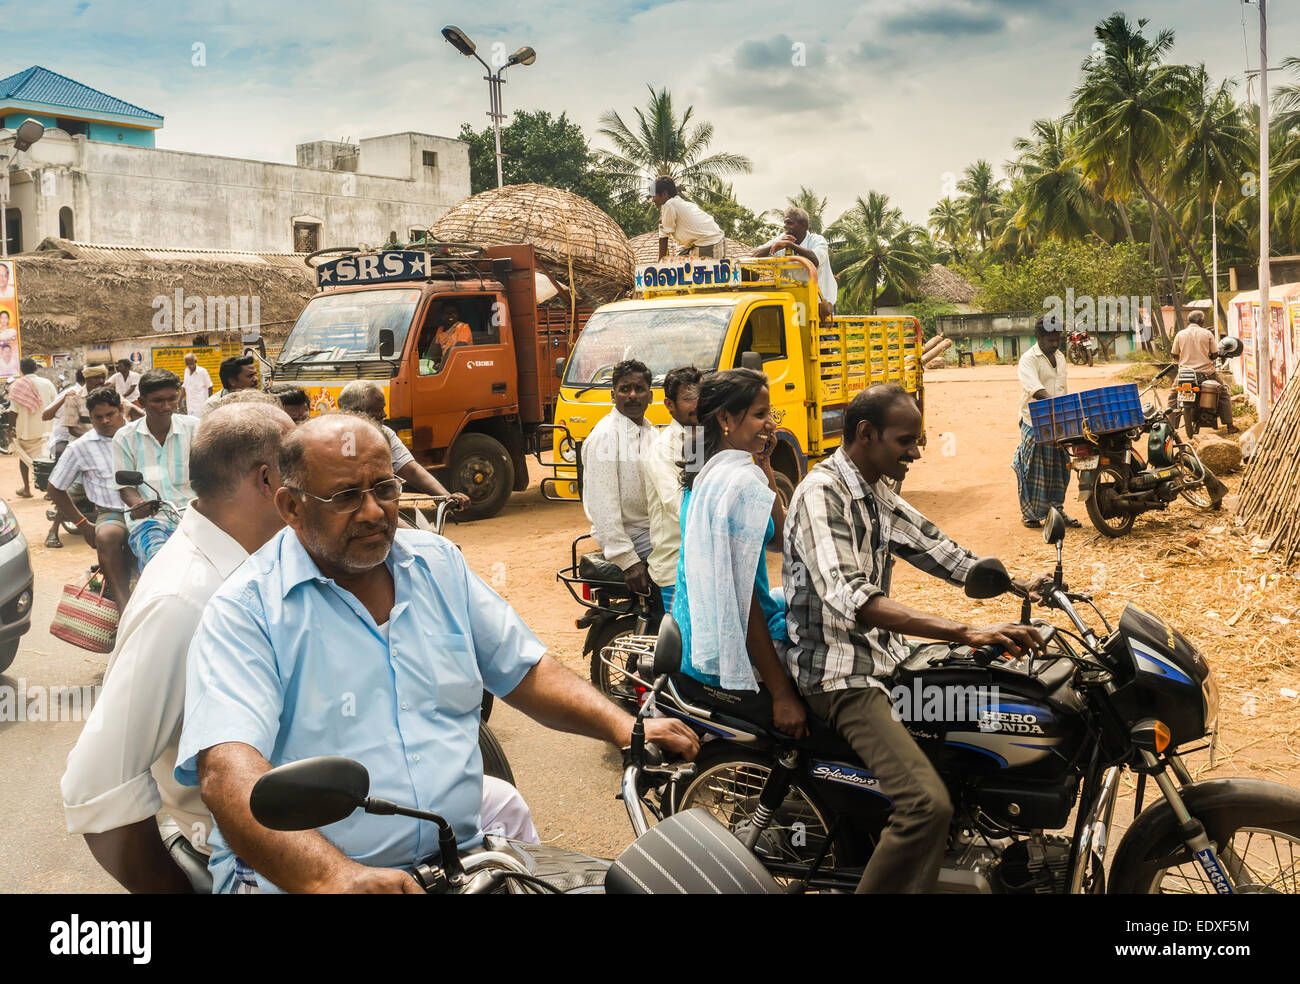 THANJAVOUR, INDIA - FEBRUARY 13: An unidentified Indian riders ride motorbikes on rural road. India, Tamil Nadu, near Thanjavour Stock Photo